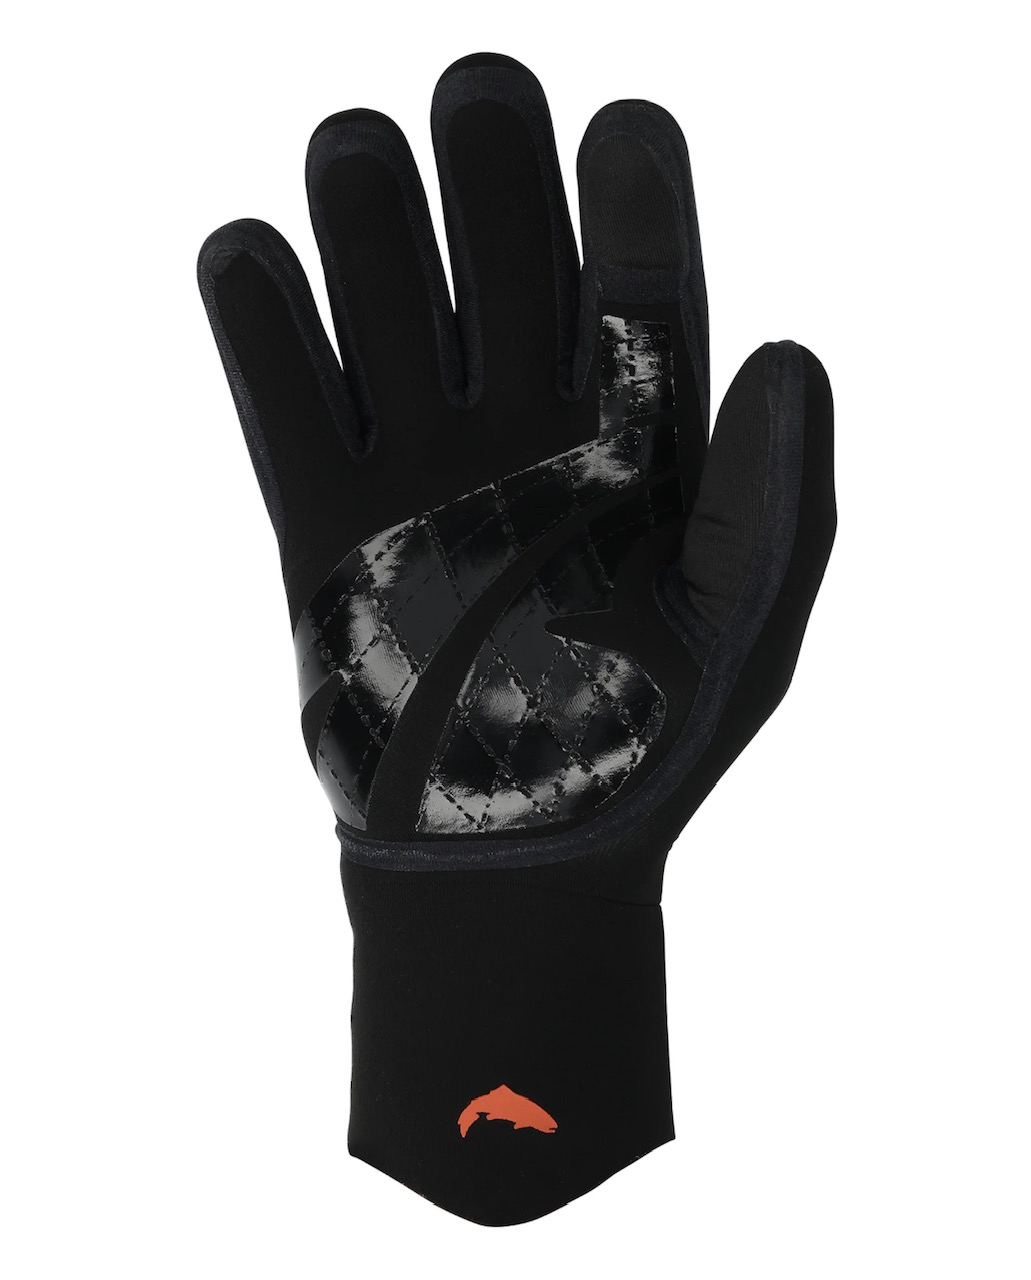 Simms ExStream Neoprene Glove - Black - Large